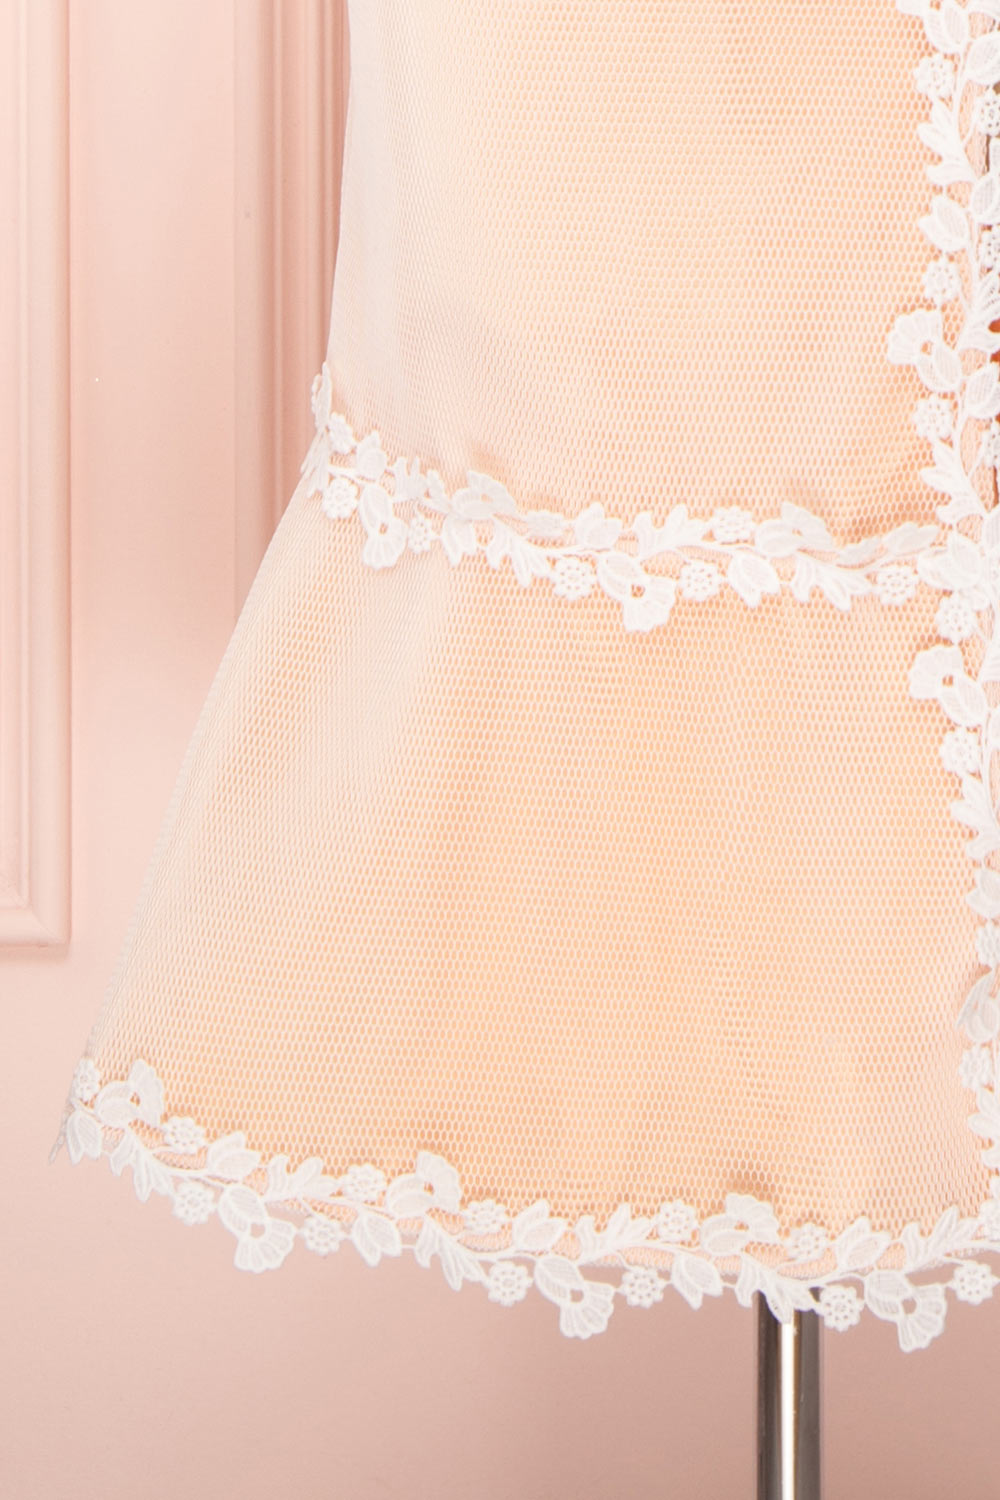 Oustina White Mesh & Peach Mermaid Cocktail Dress | Boutique 1861 bottom close-up